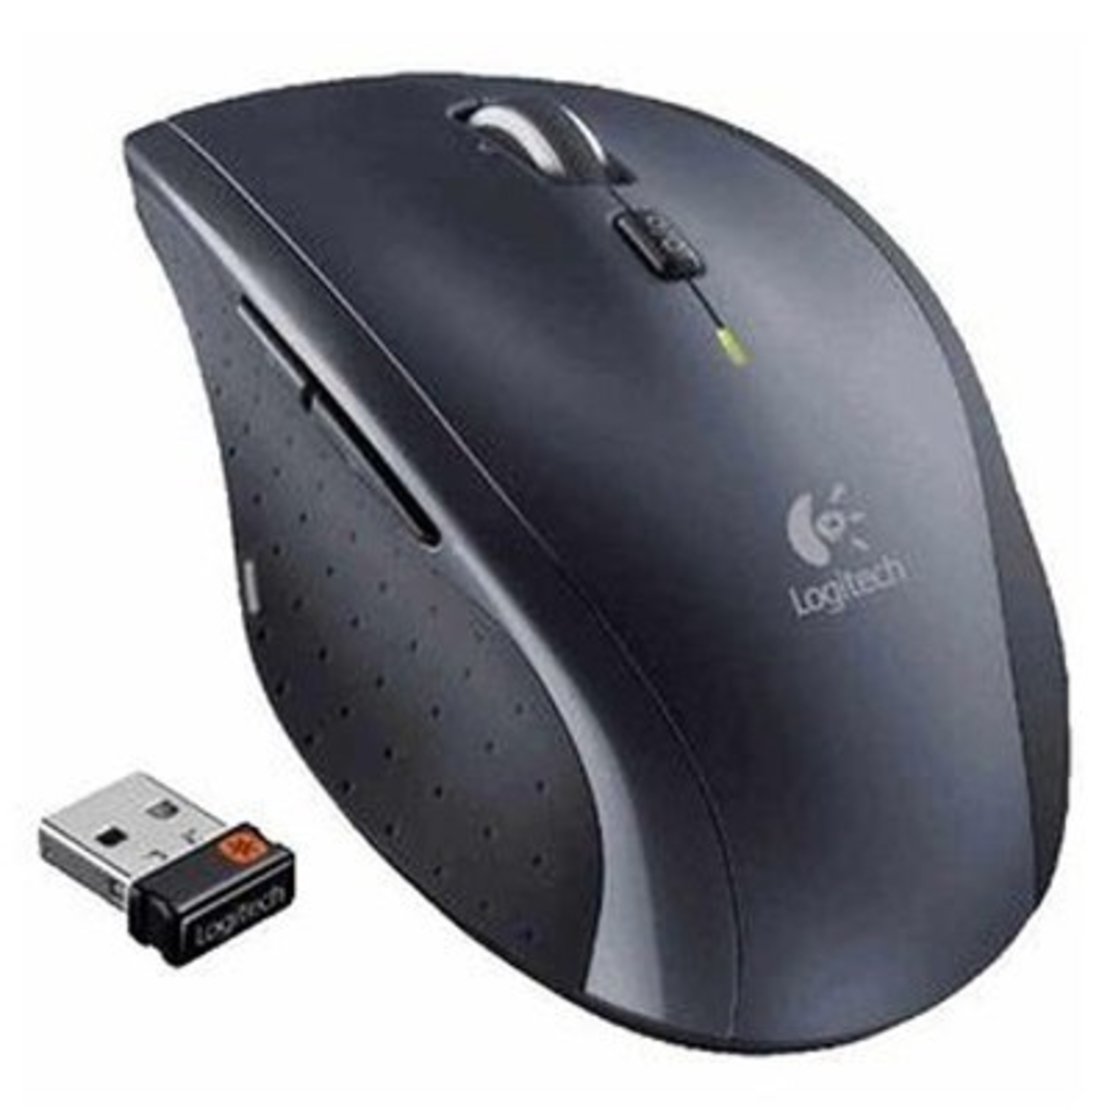 עכבר אלחוטי LogiTech Marathon Mouse M705 לוגיטק 